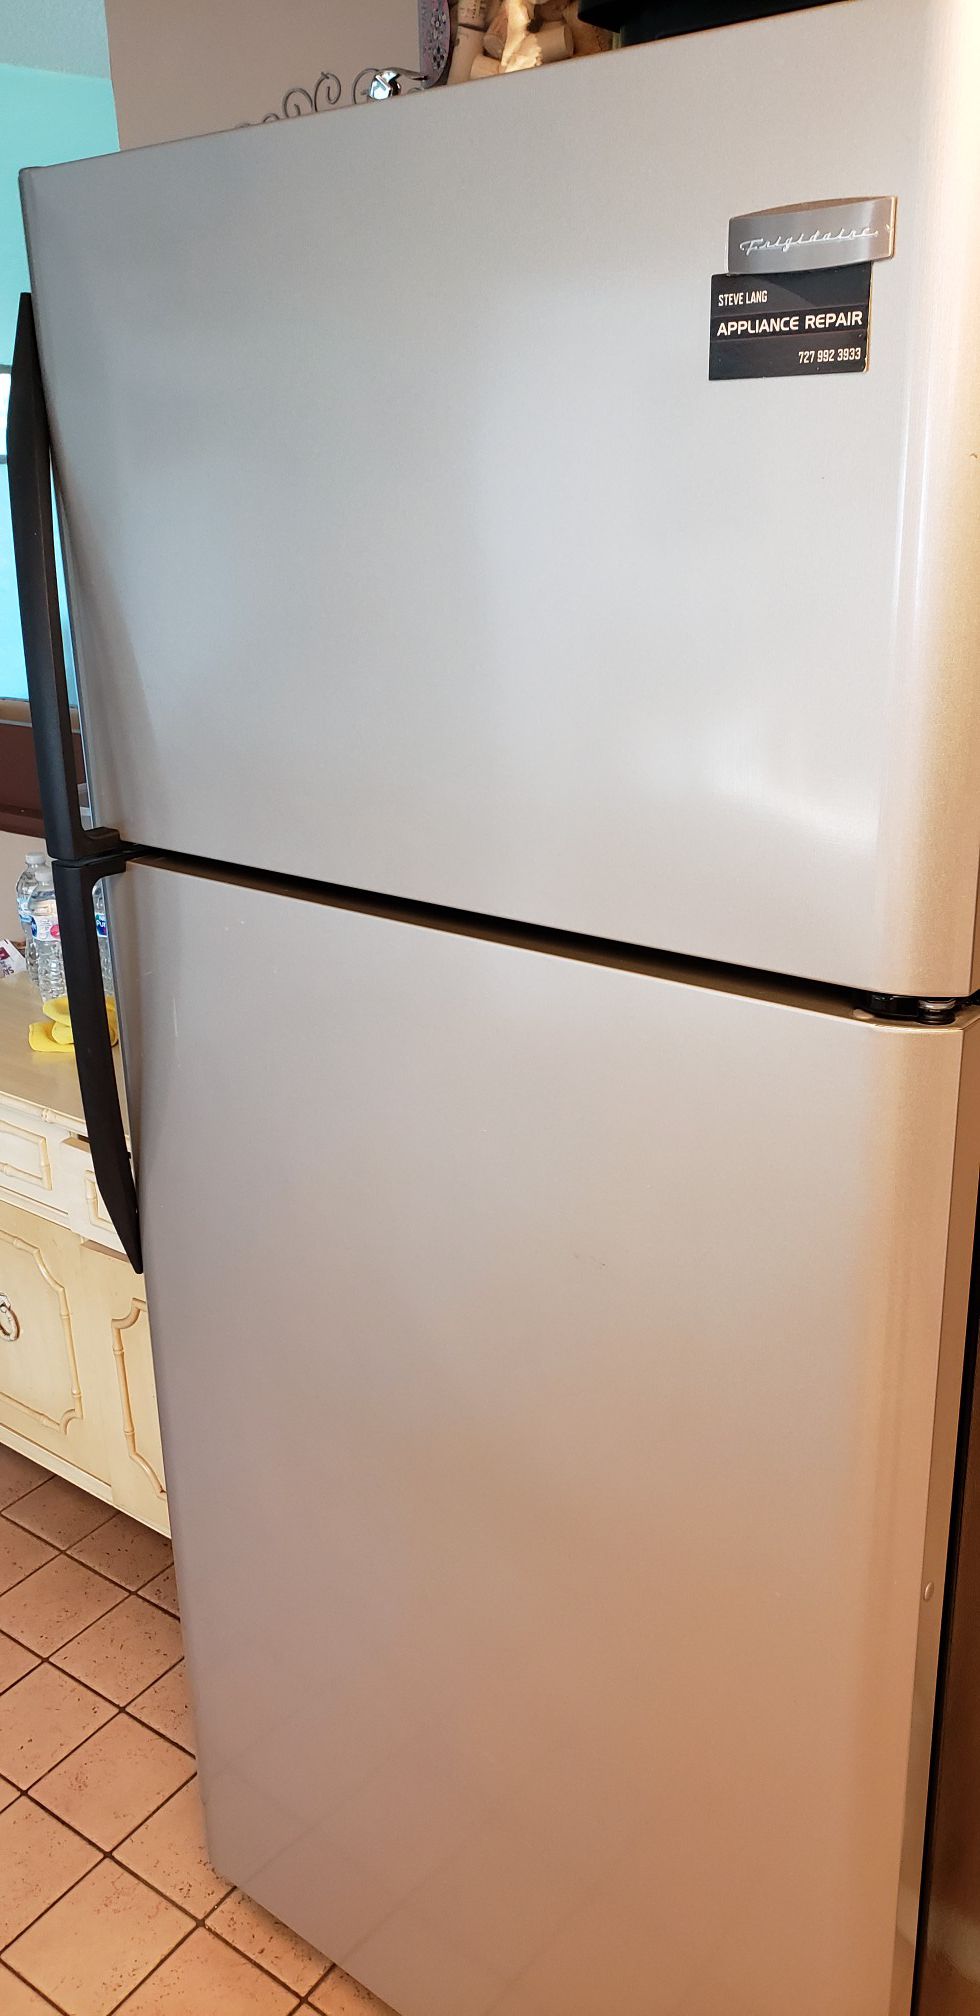 Refrigerator washer dryer dishwasher stove oven problems??